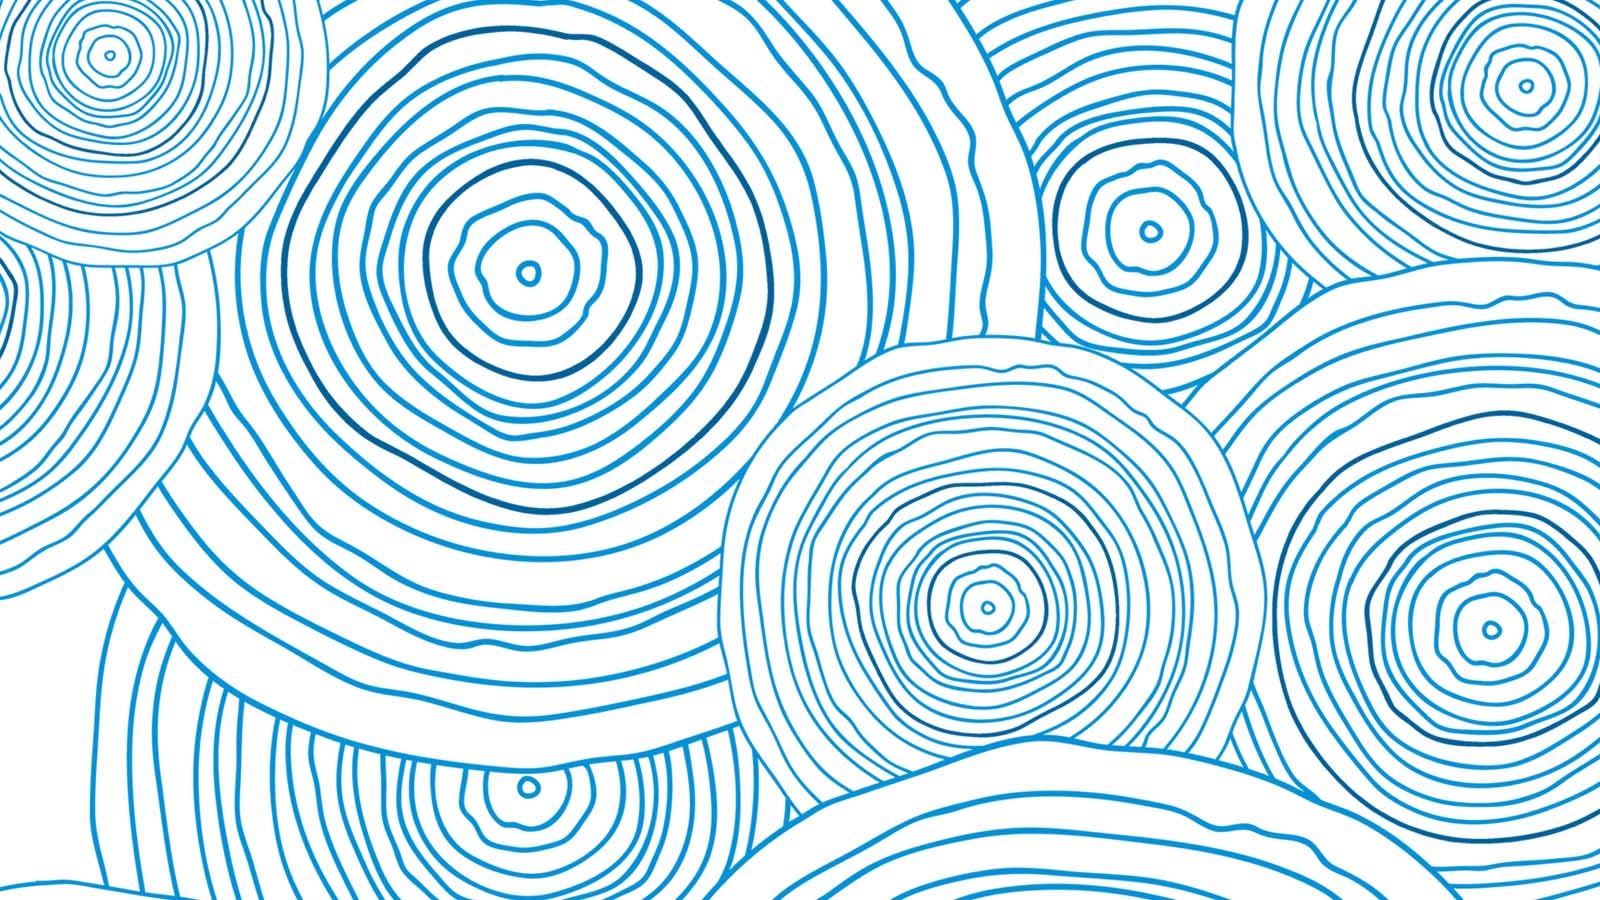 Artwork showing blue patterns of circles